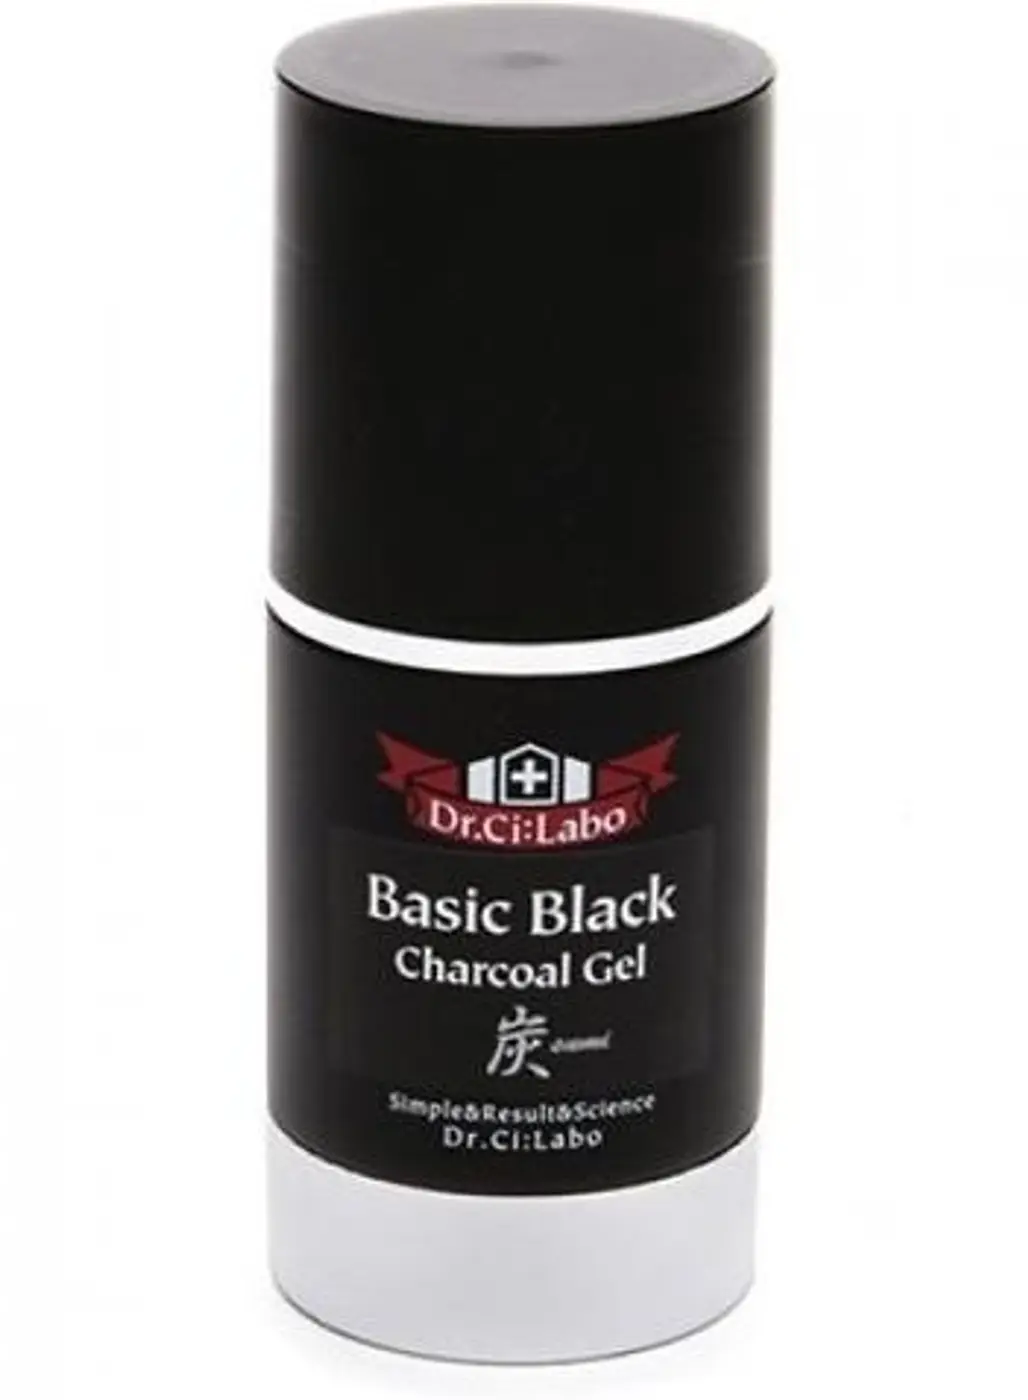 Dr. Ci:Labo Basic Black Charcoal Gel